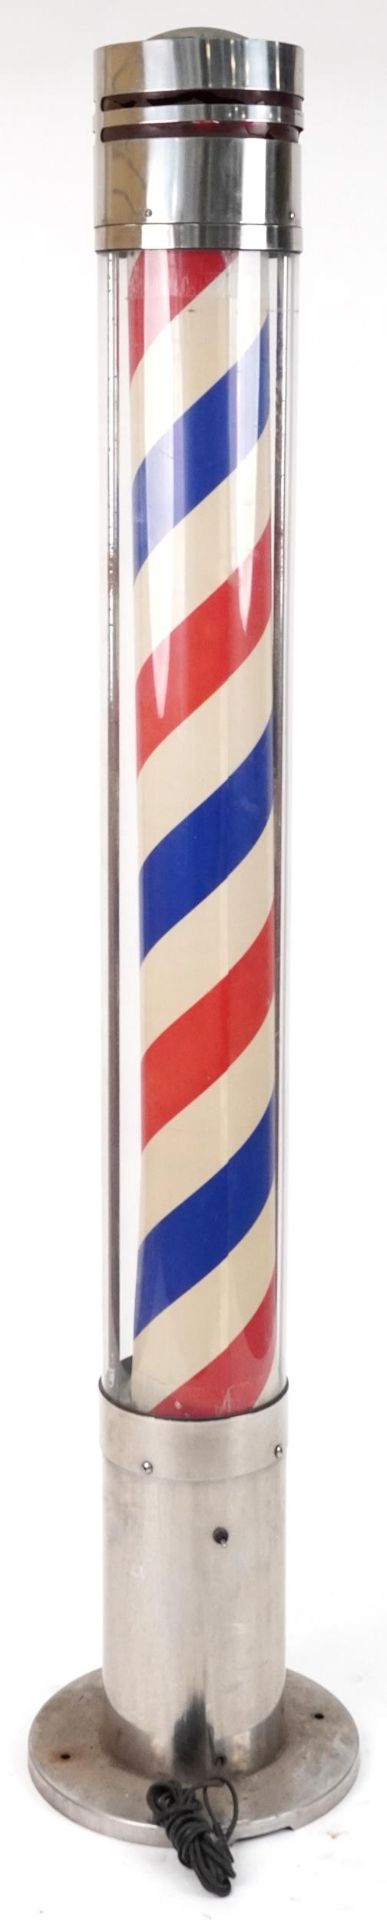 Vintage illuminated barber's pole with chromed mounts, 197cm high - Bild 2 aus 2